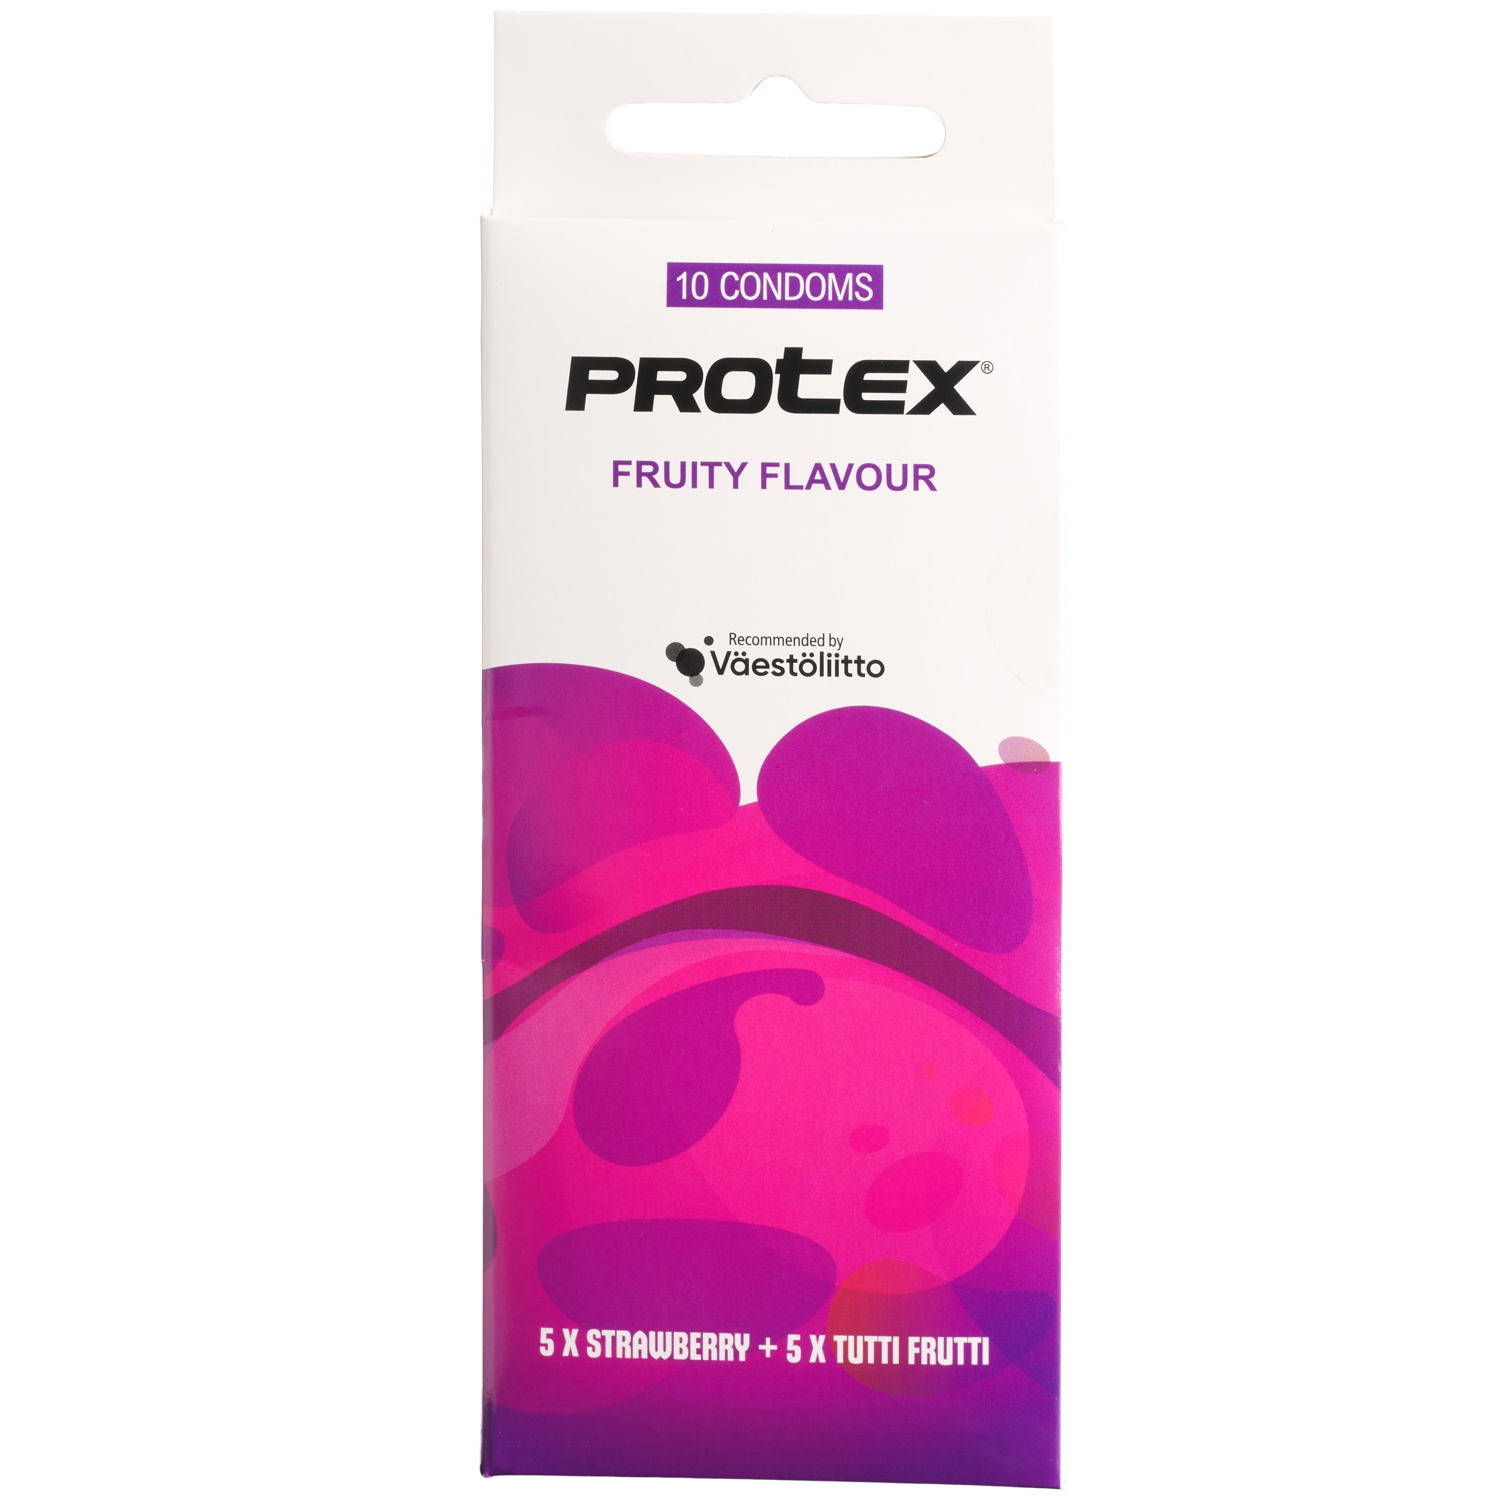 Protex Fruity Flavour Strawberry & Tutti Frutti Kondomer 10 stk - Klar